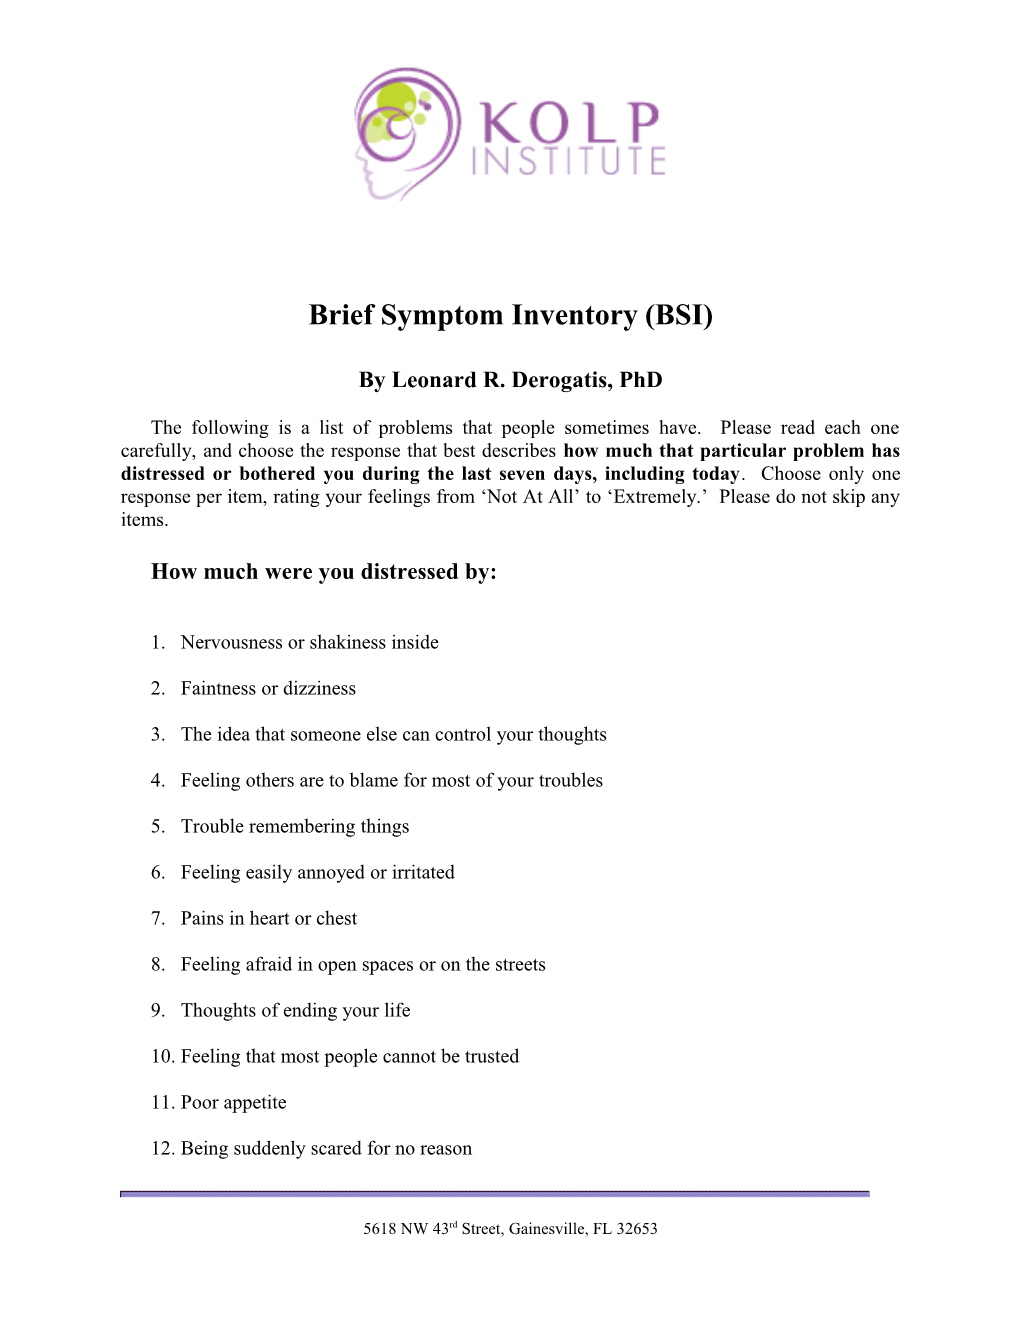 Brief Symptom Inventory(BSI)